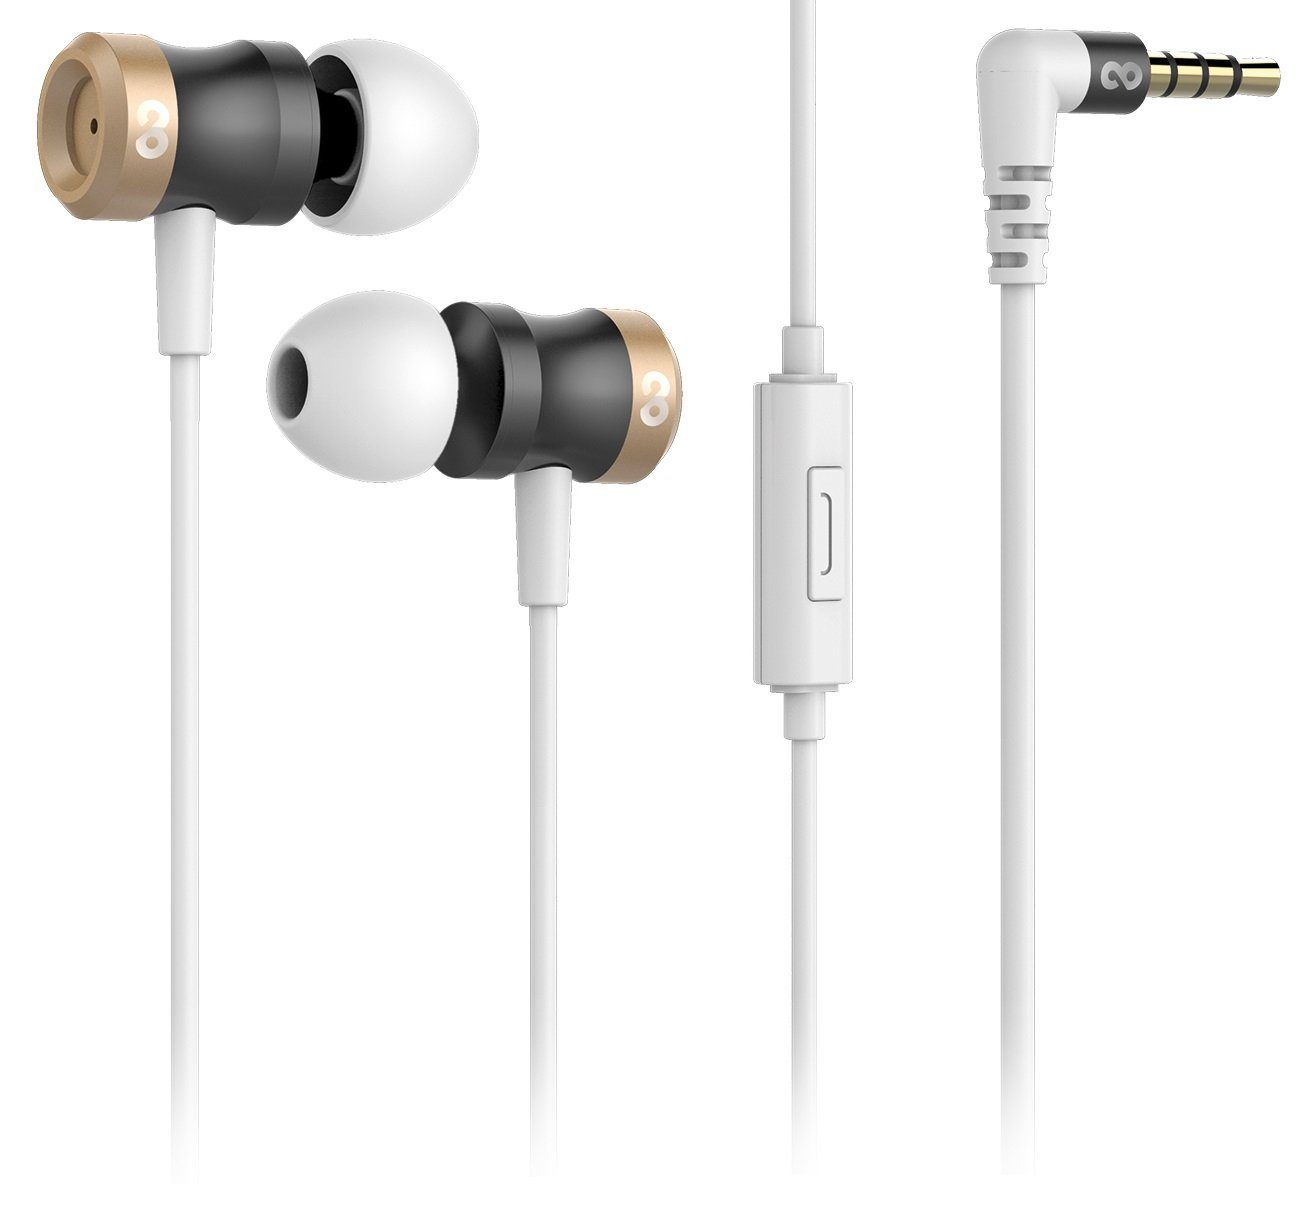 In-Ear Ohrhörer, Kopfhörer / conecto (optional: In-Ear-Kopfhörer 3 Earphones Headset) mit Ohrpassstücken (In-Ear conecto gold